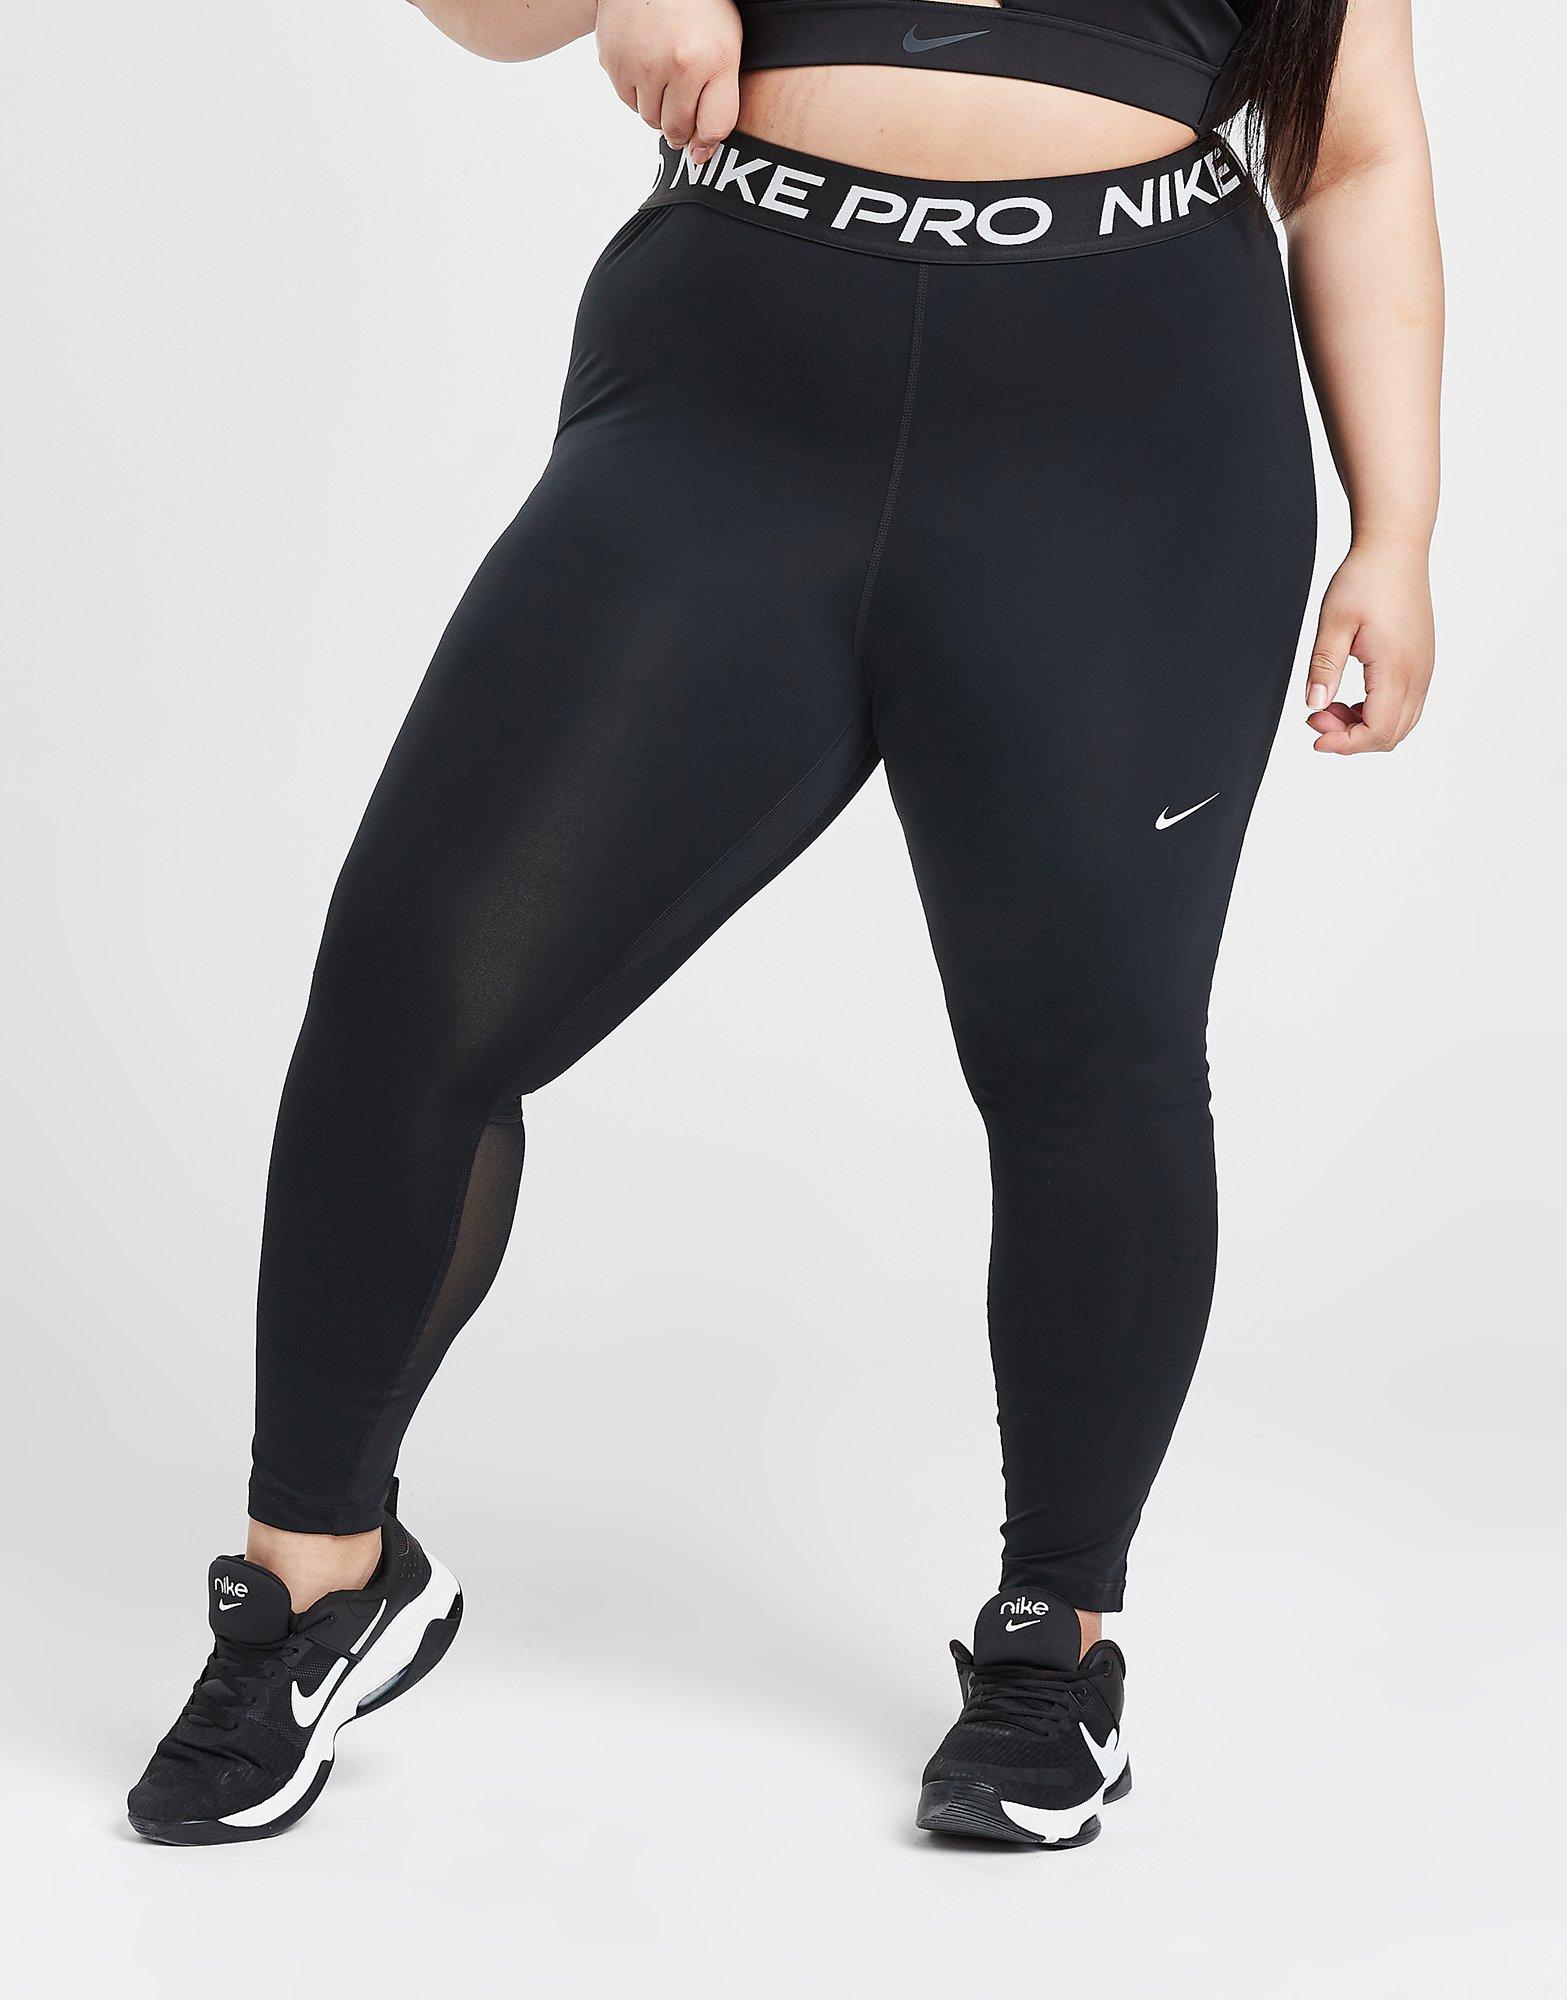 Nike Pro Women's Mid-Rise Crop Leggings DC5393-013 Size 1X (Plus Size)  Black